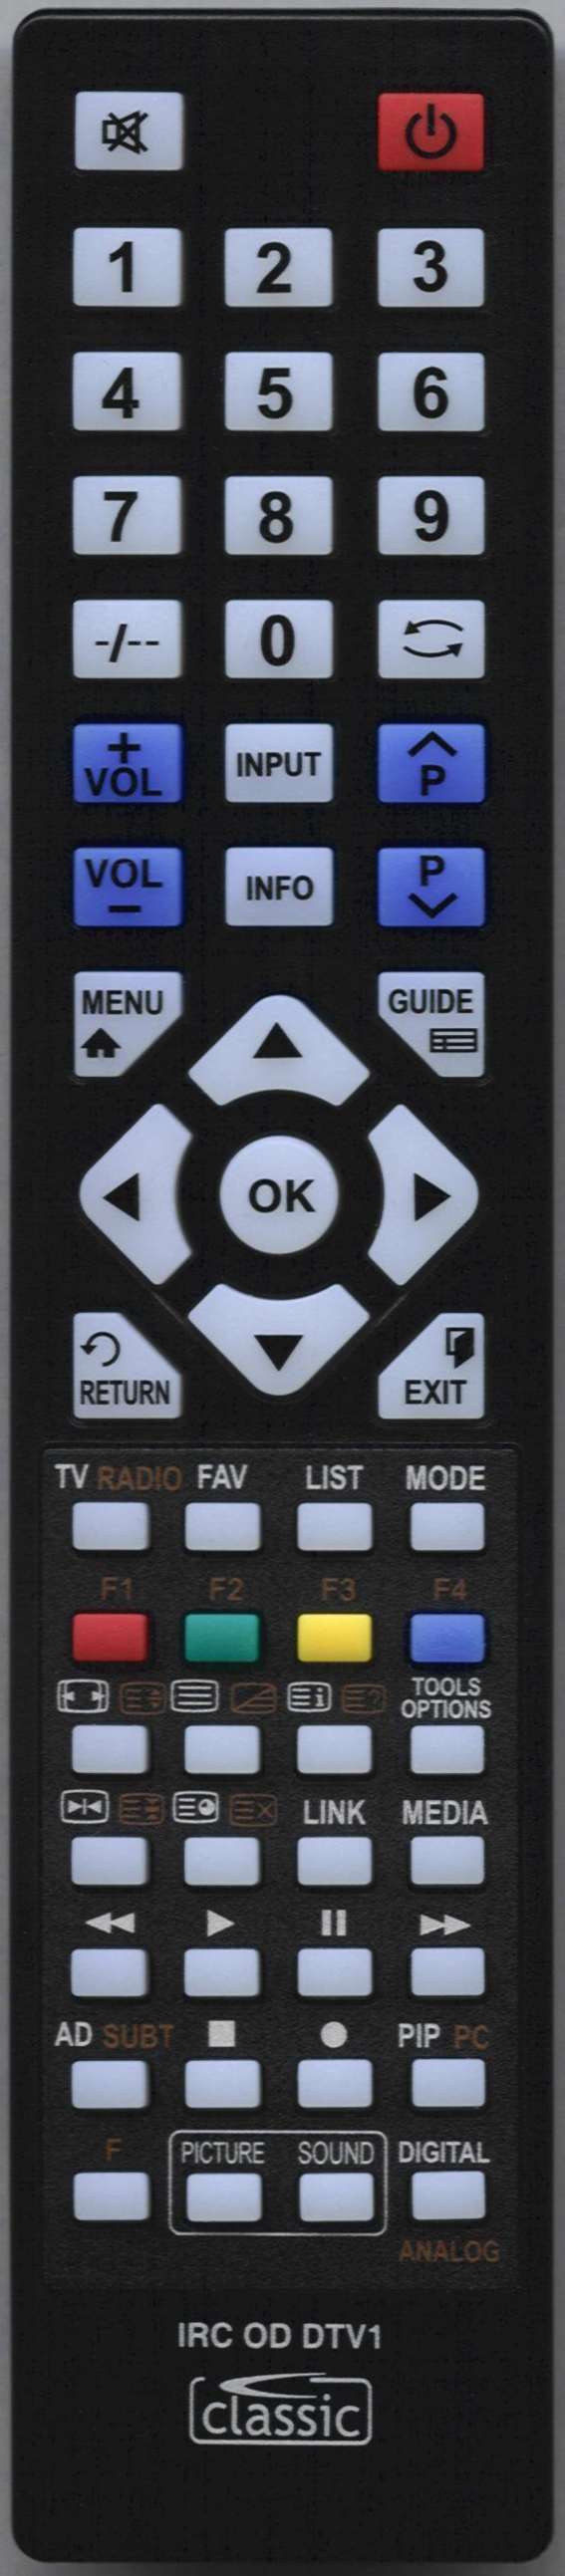 Kenmark 19LVD01D Remote Control